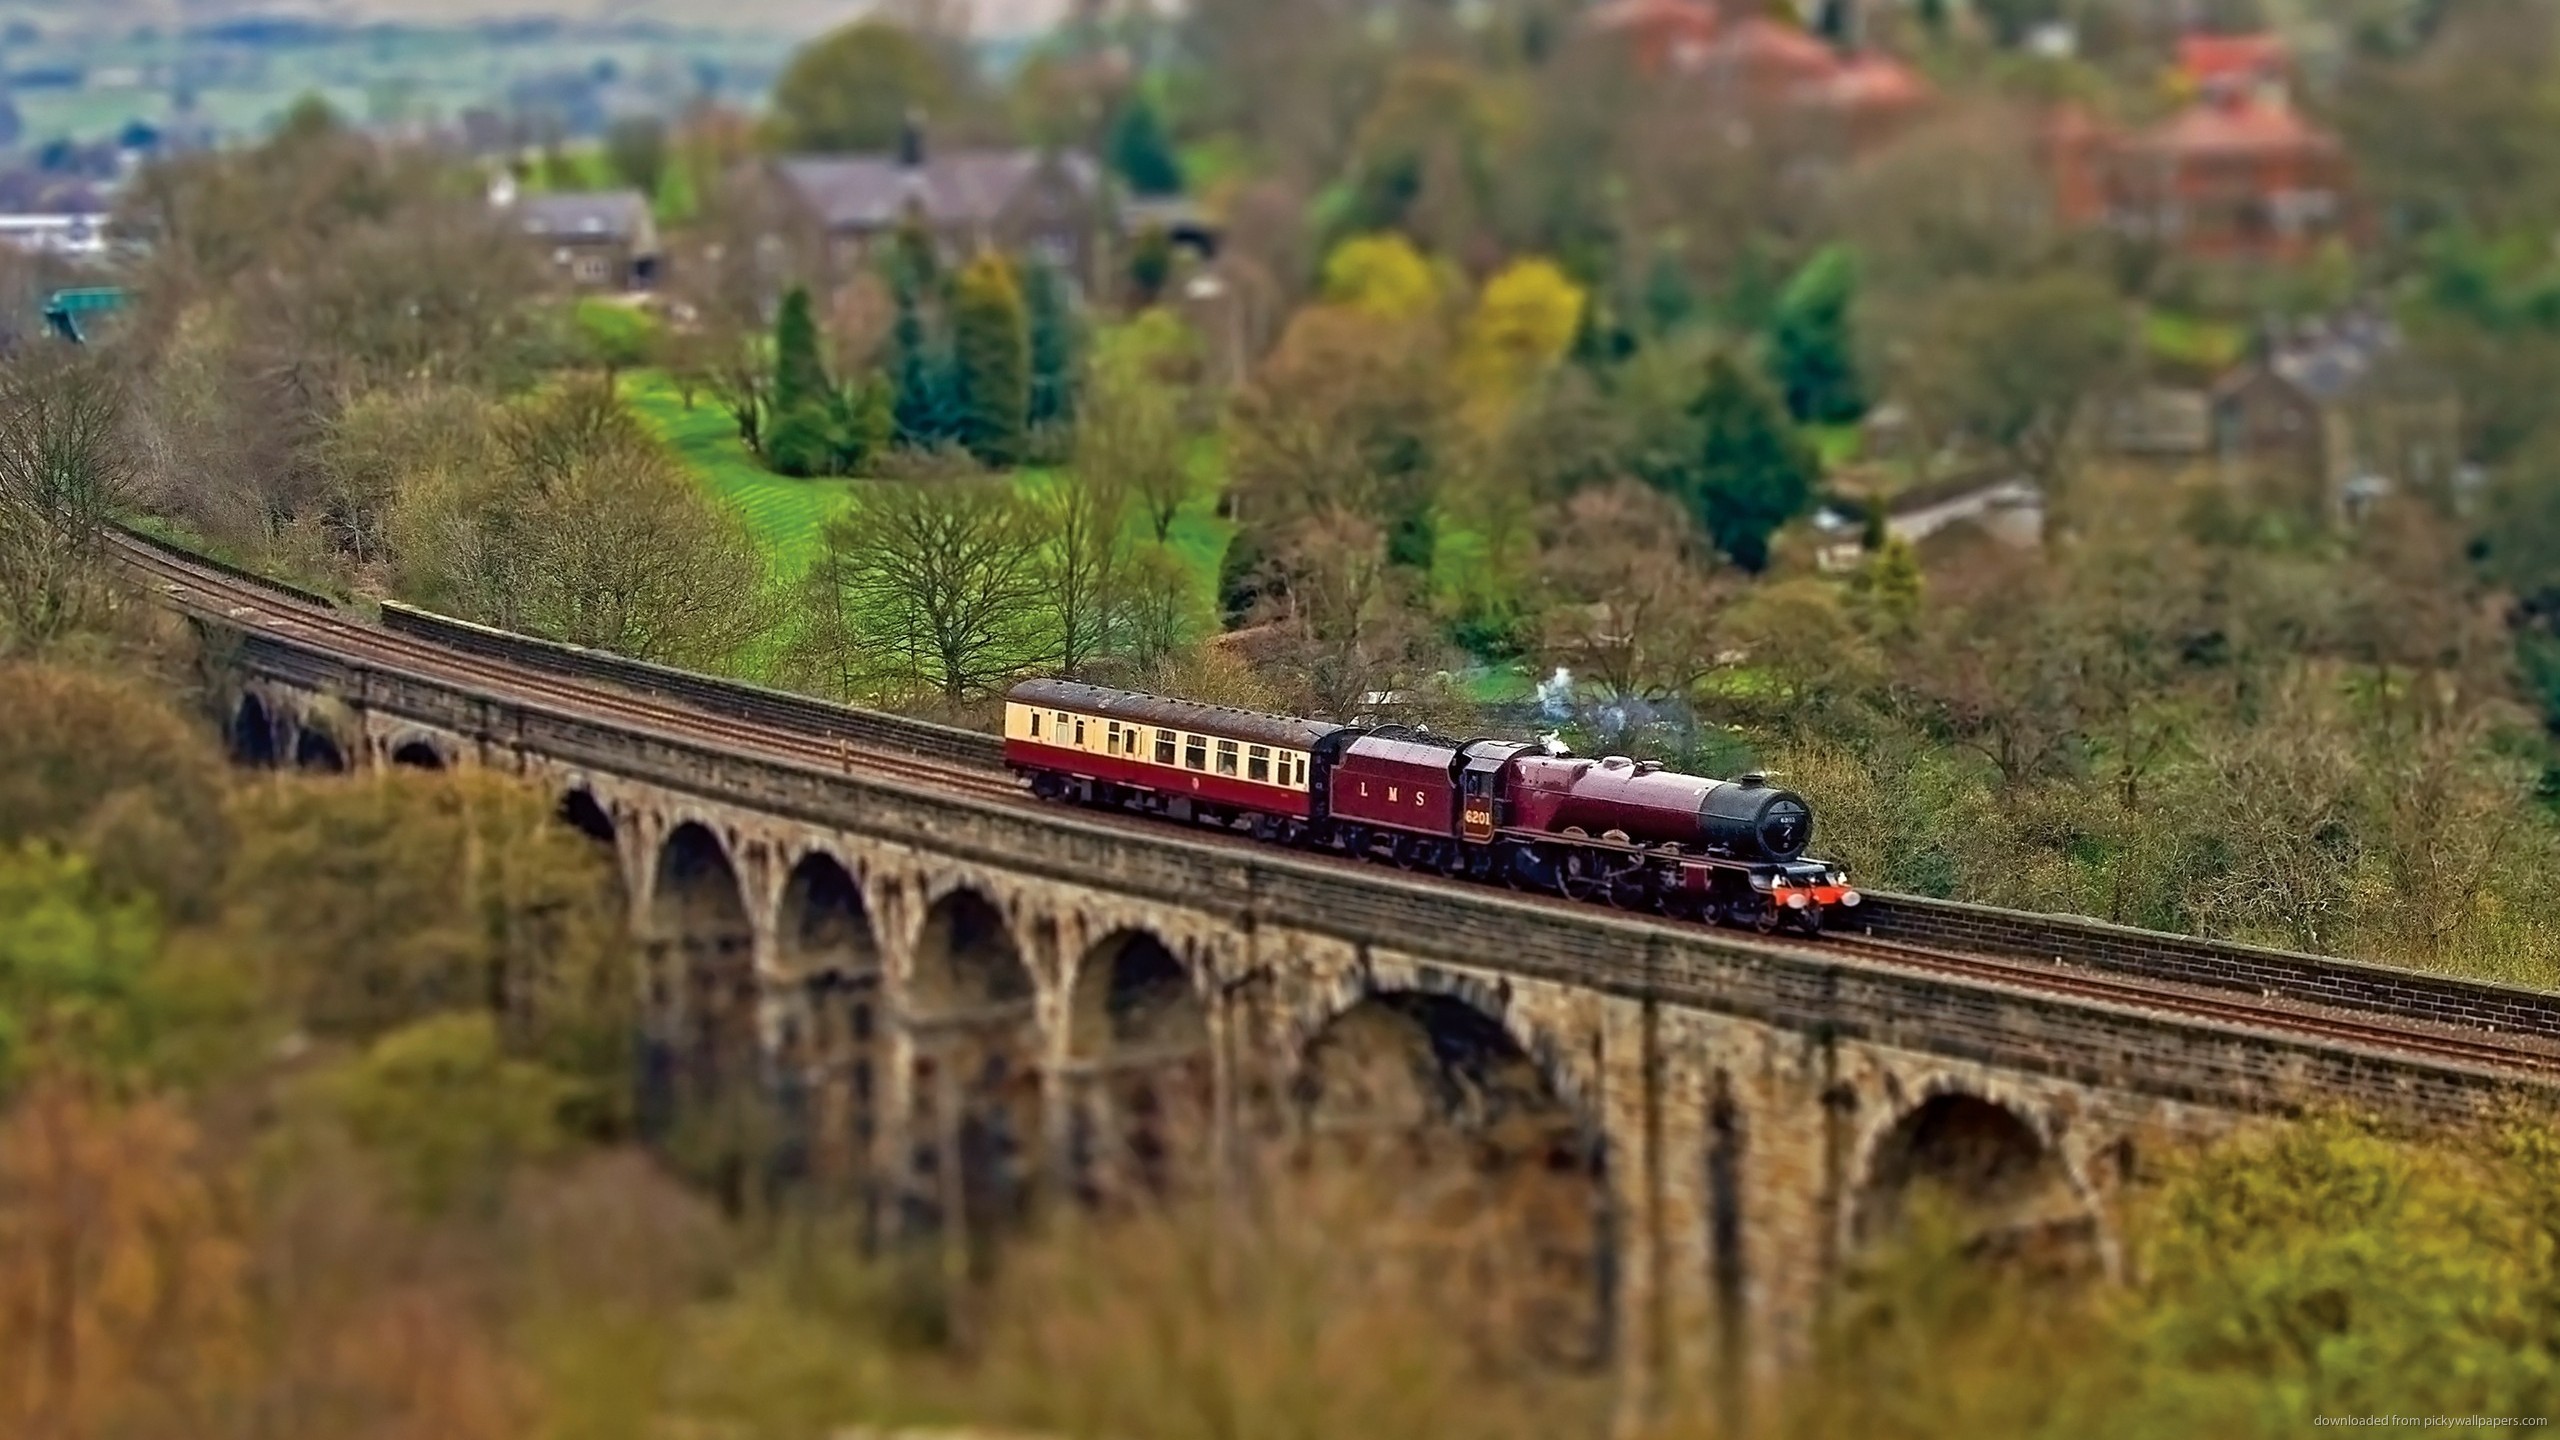  2560x1440 miscellaneous ed old train on a bridge wallpaper download